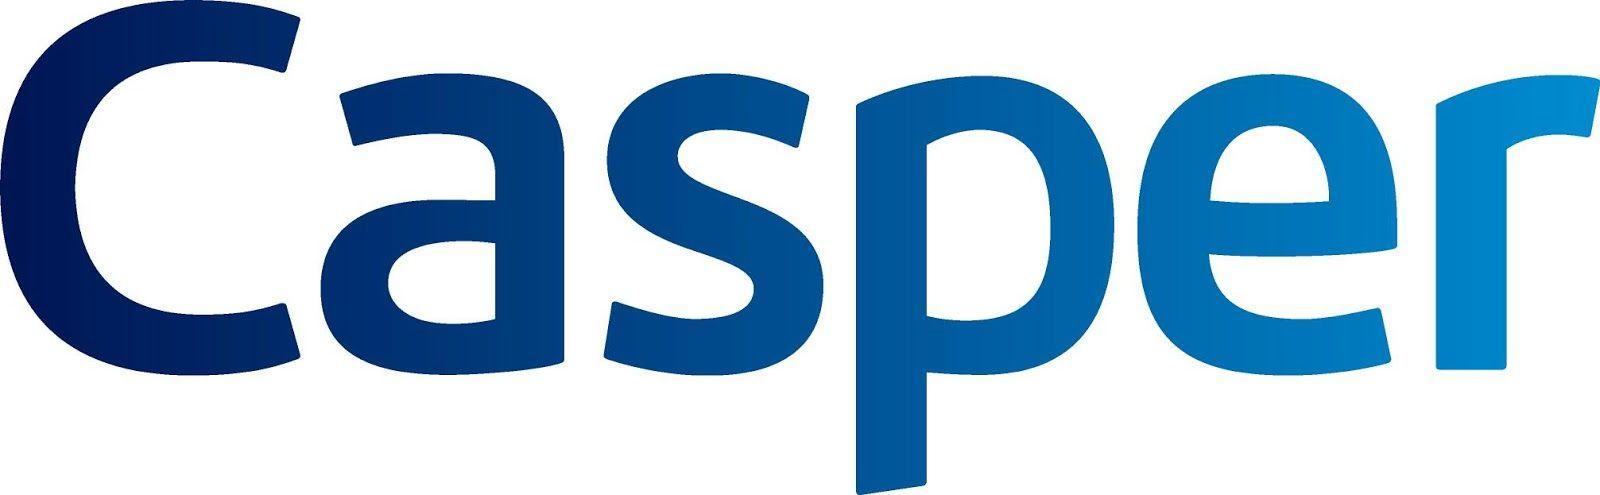 Casper Logo - 5f70f-casper-logo * Cepfacto Garanti Hizmetleri - Cepfacto Garanti ...